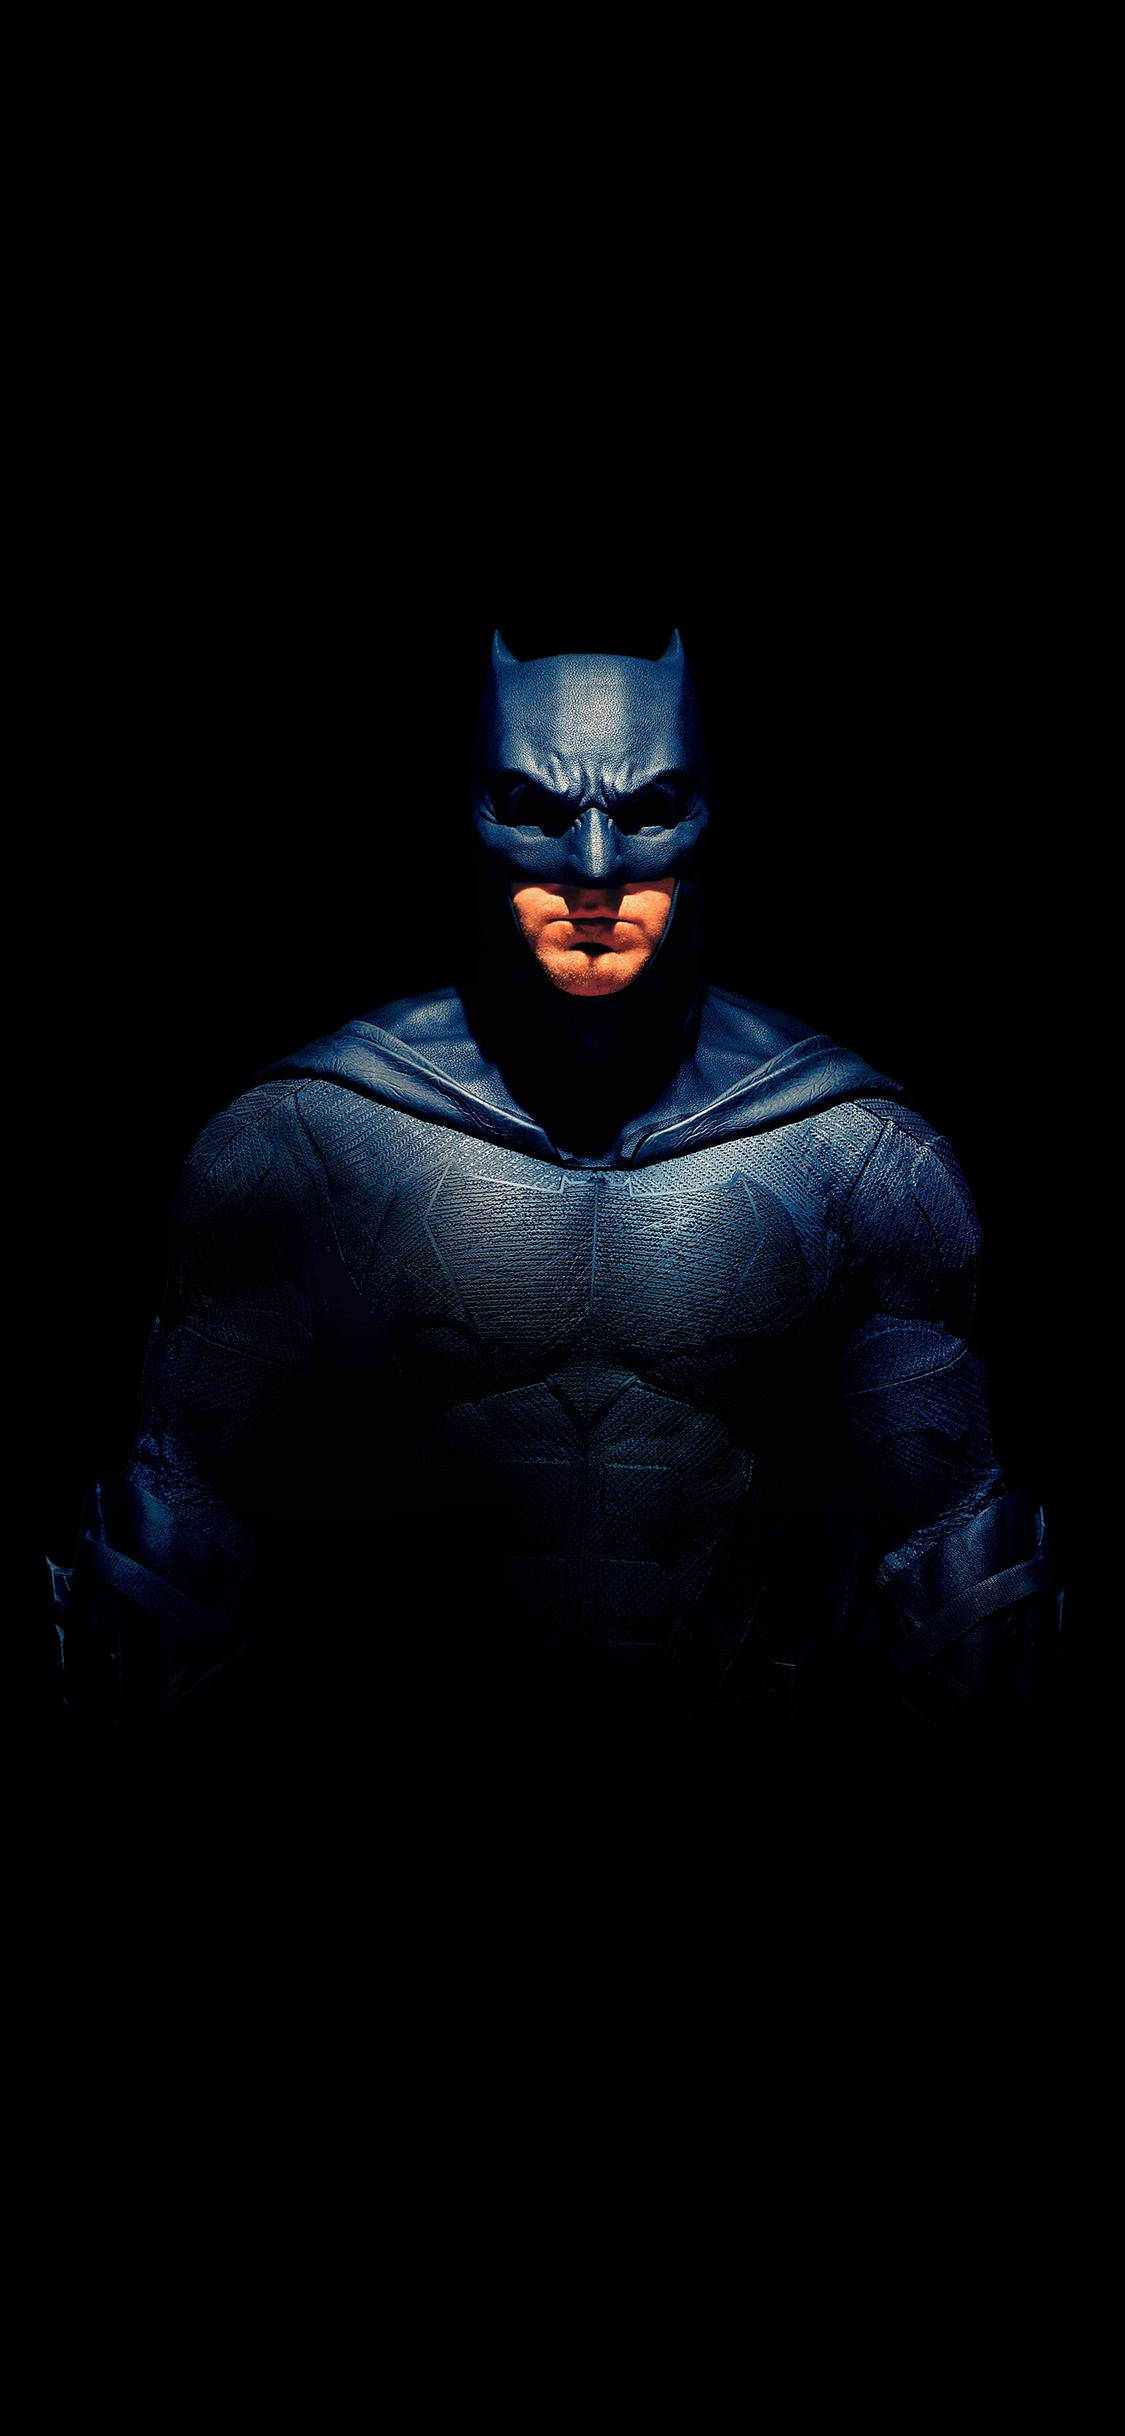 Batman On The Dark iPhone X Wallpaper